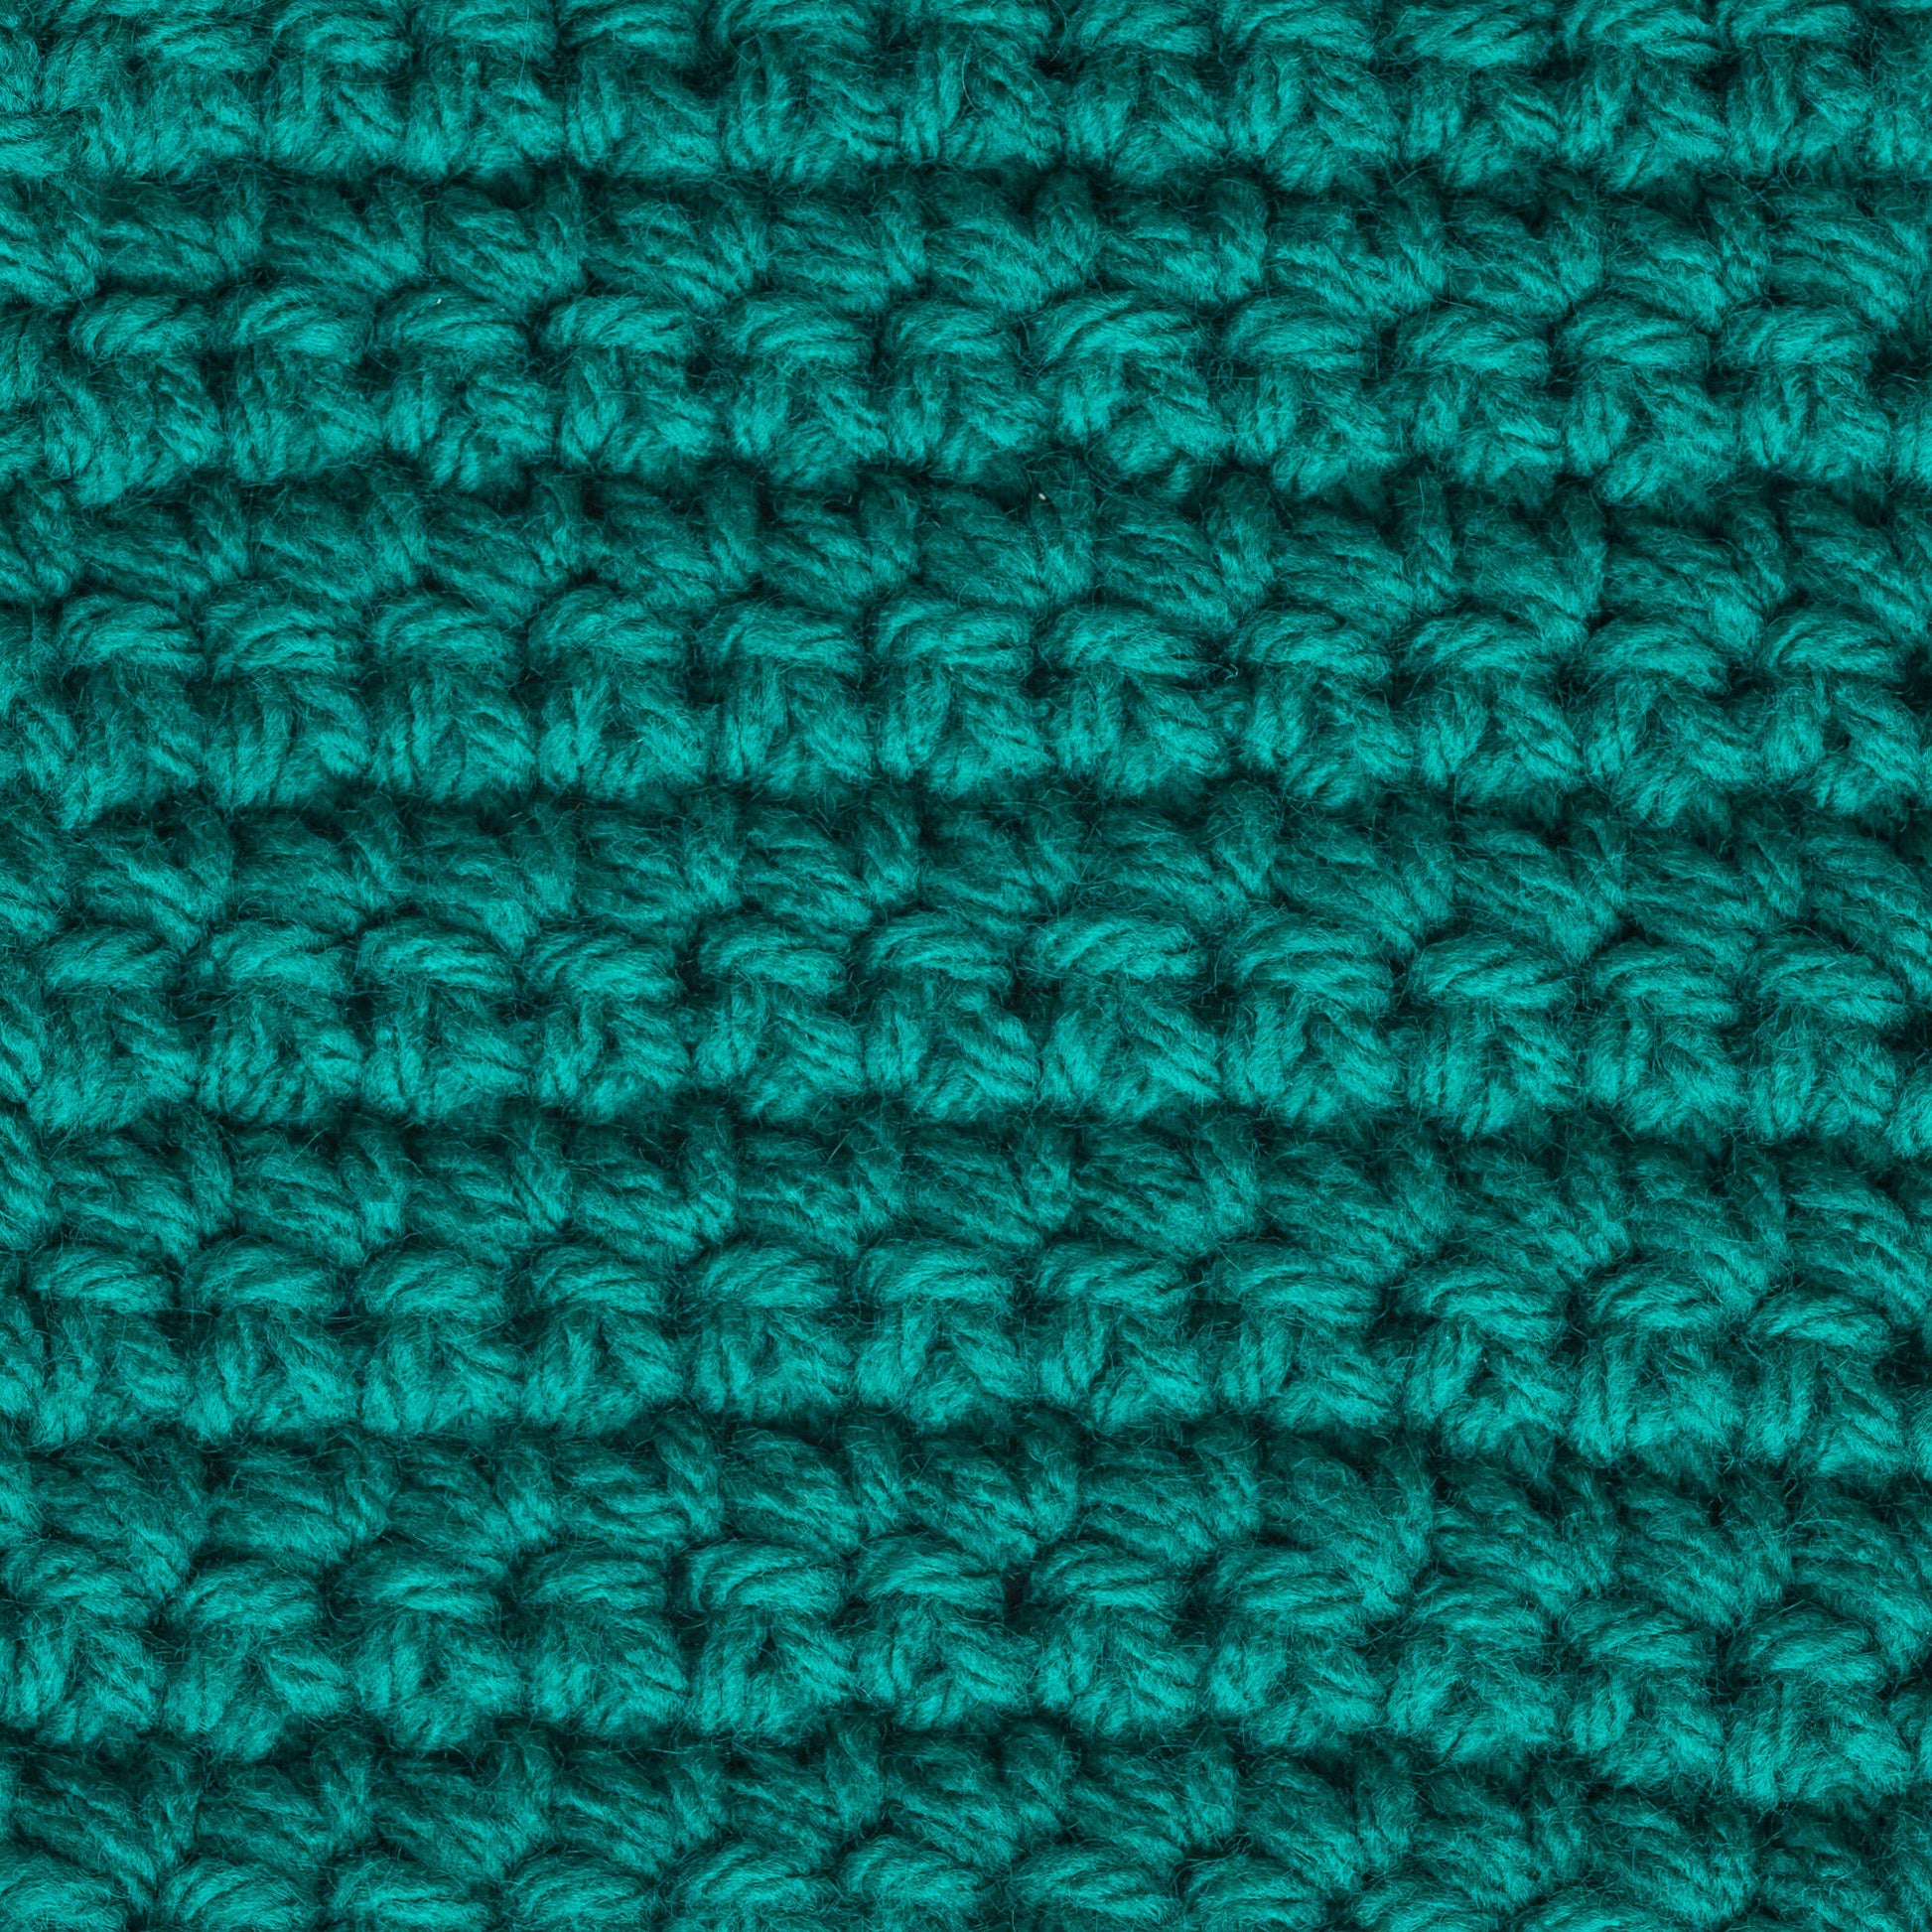 Clearance Knitting Yarn & Wool and Knitting Patterns